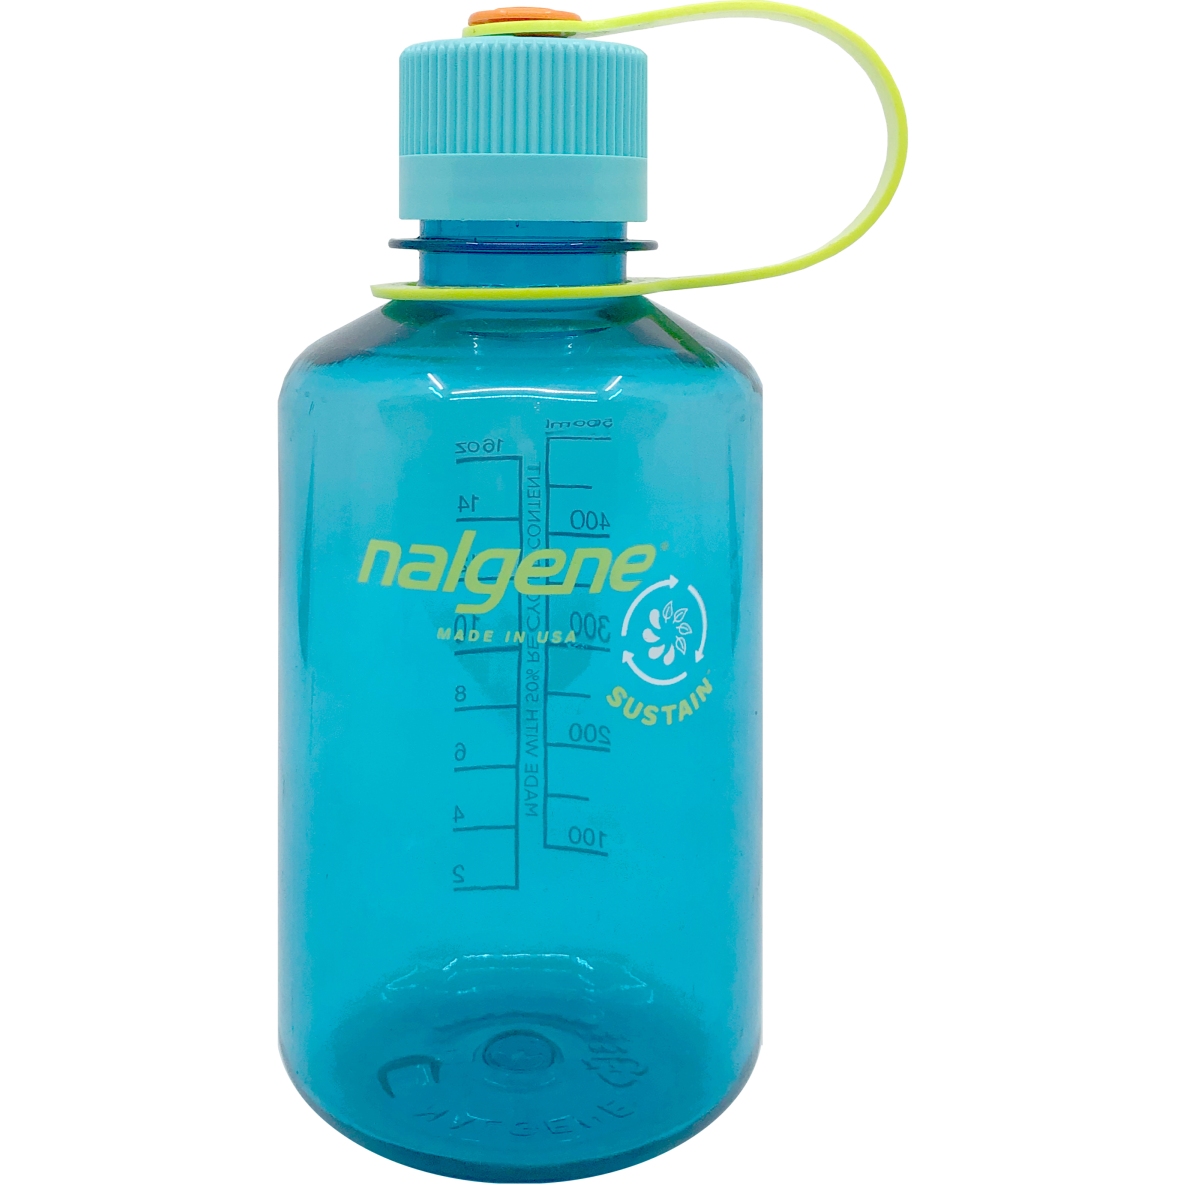 Productfoto van Nalgene Narrow Mouth Sustain Drinkfles 0,5l - cerulean